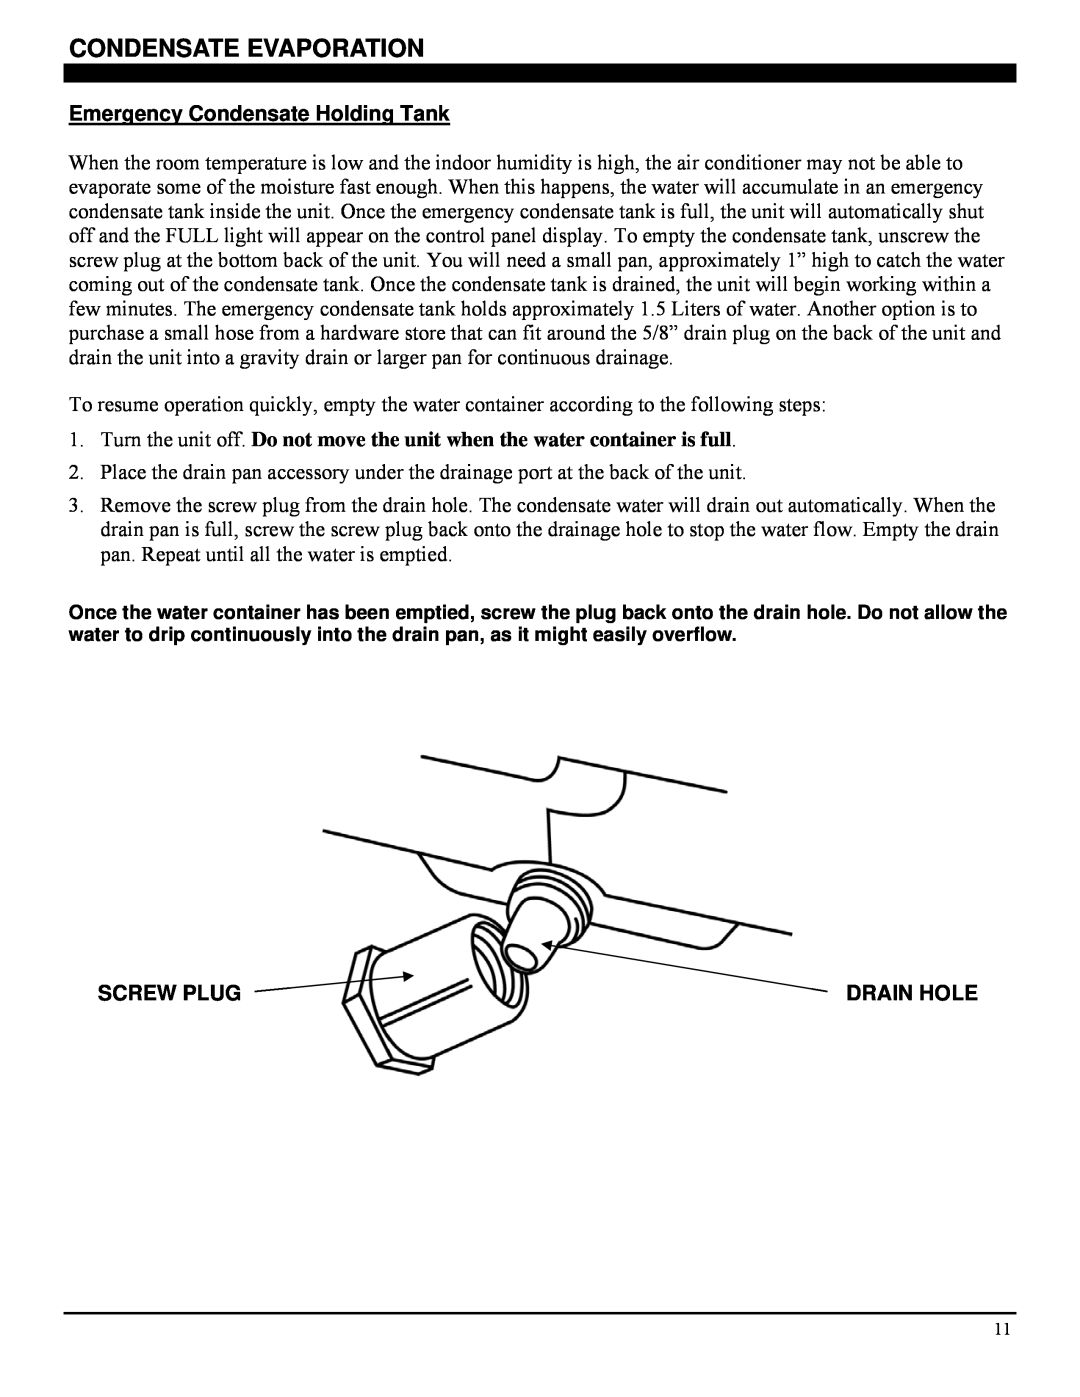 Soleus Air PE6-10R-03 manual Condensate Evaporation, Emergency Condensate Holding Tank, Screw Plug, Drain Hole 